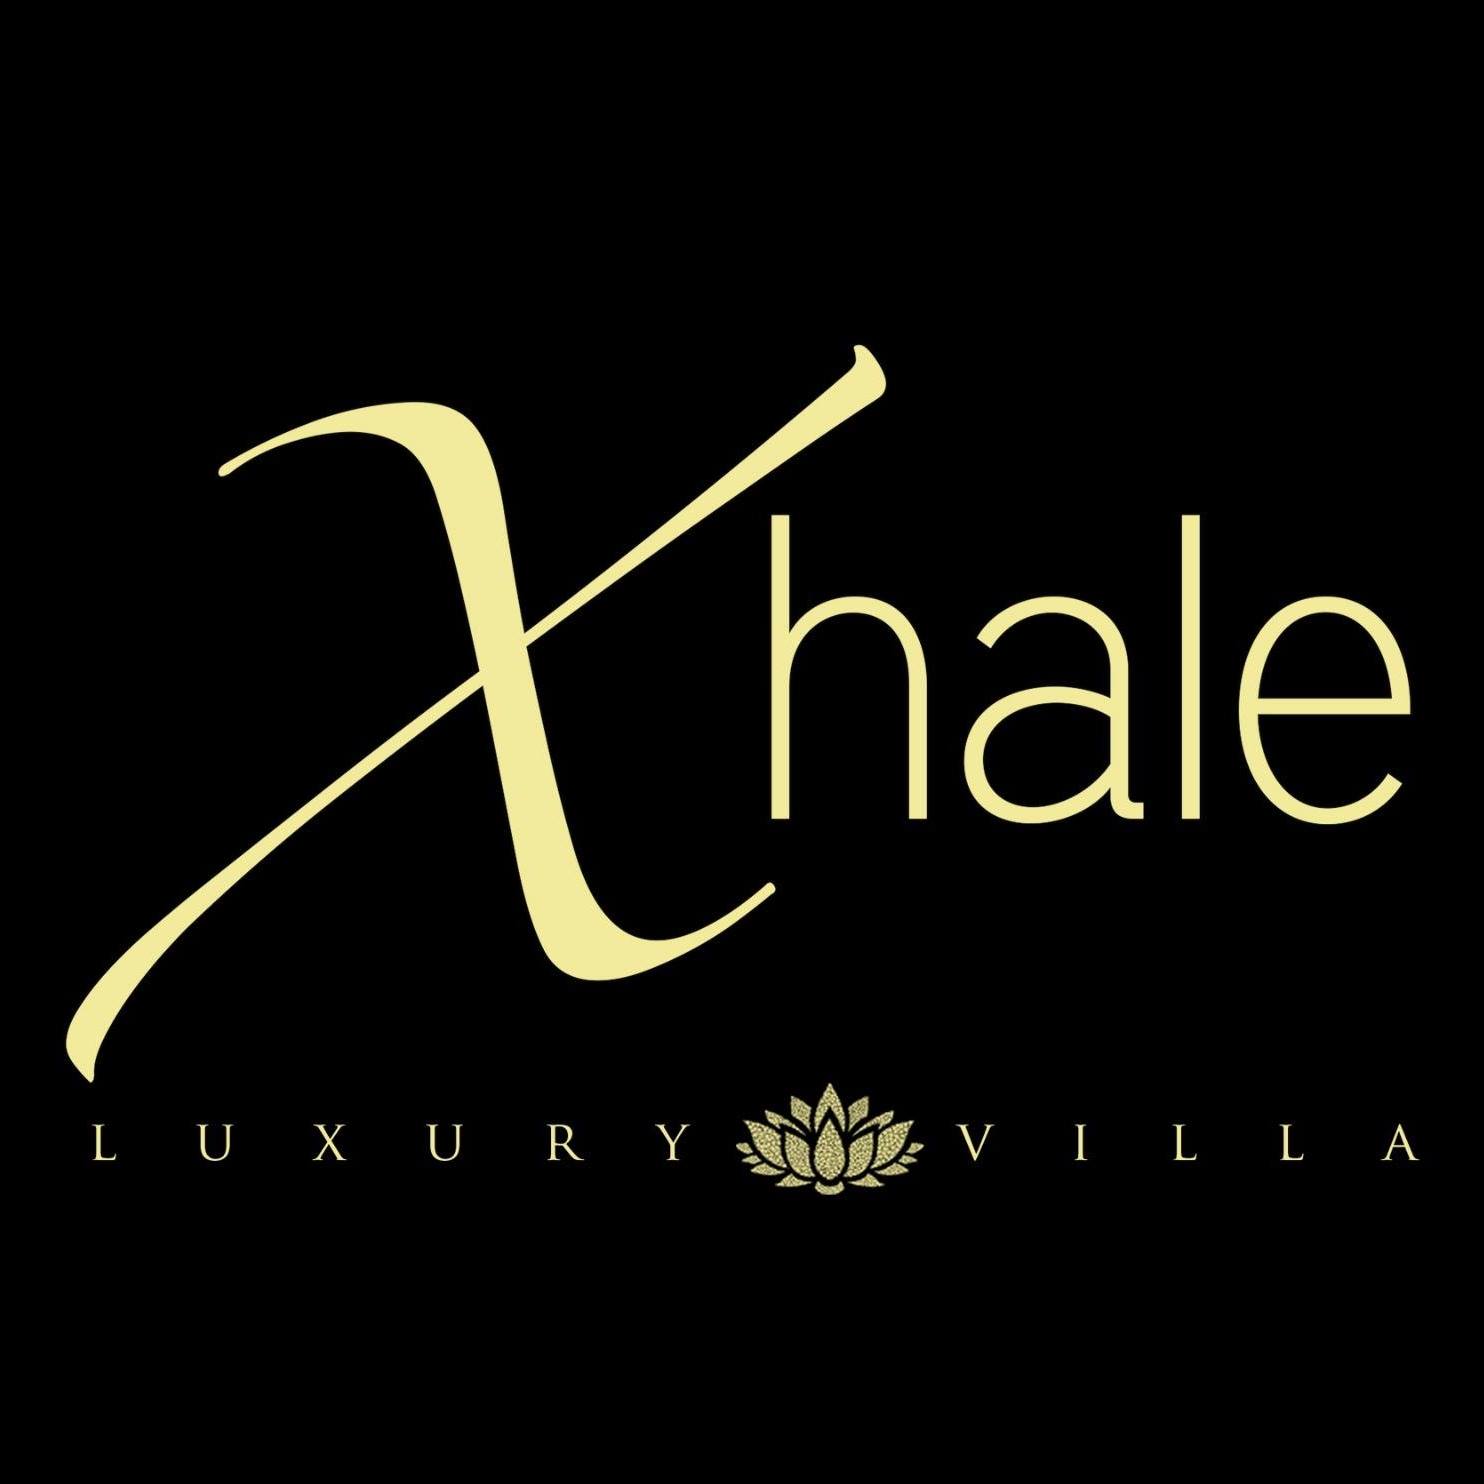 Image result for Xhale Luxury Villa